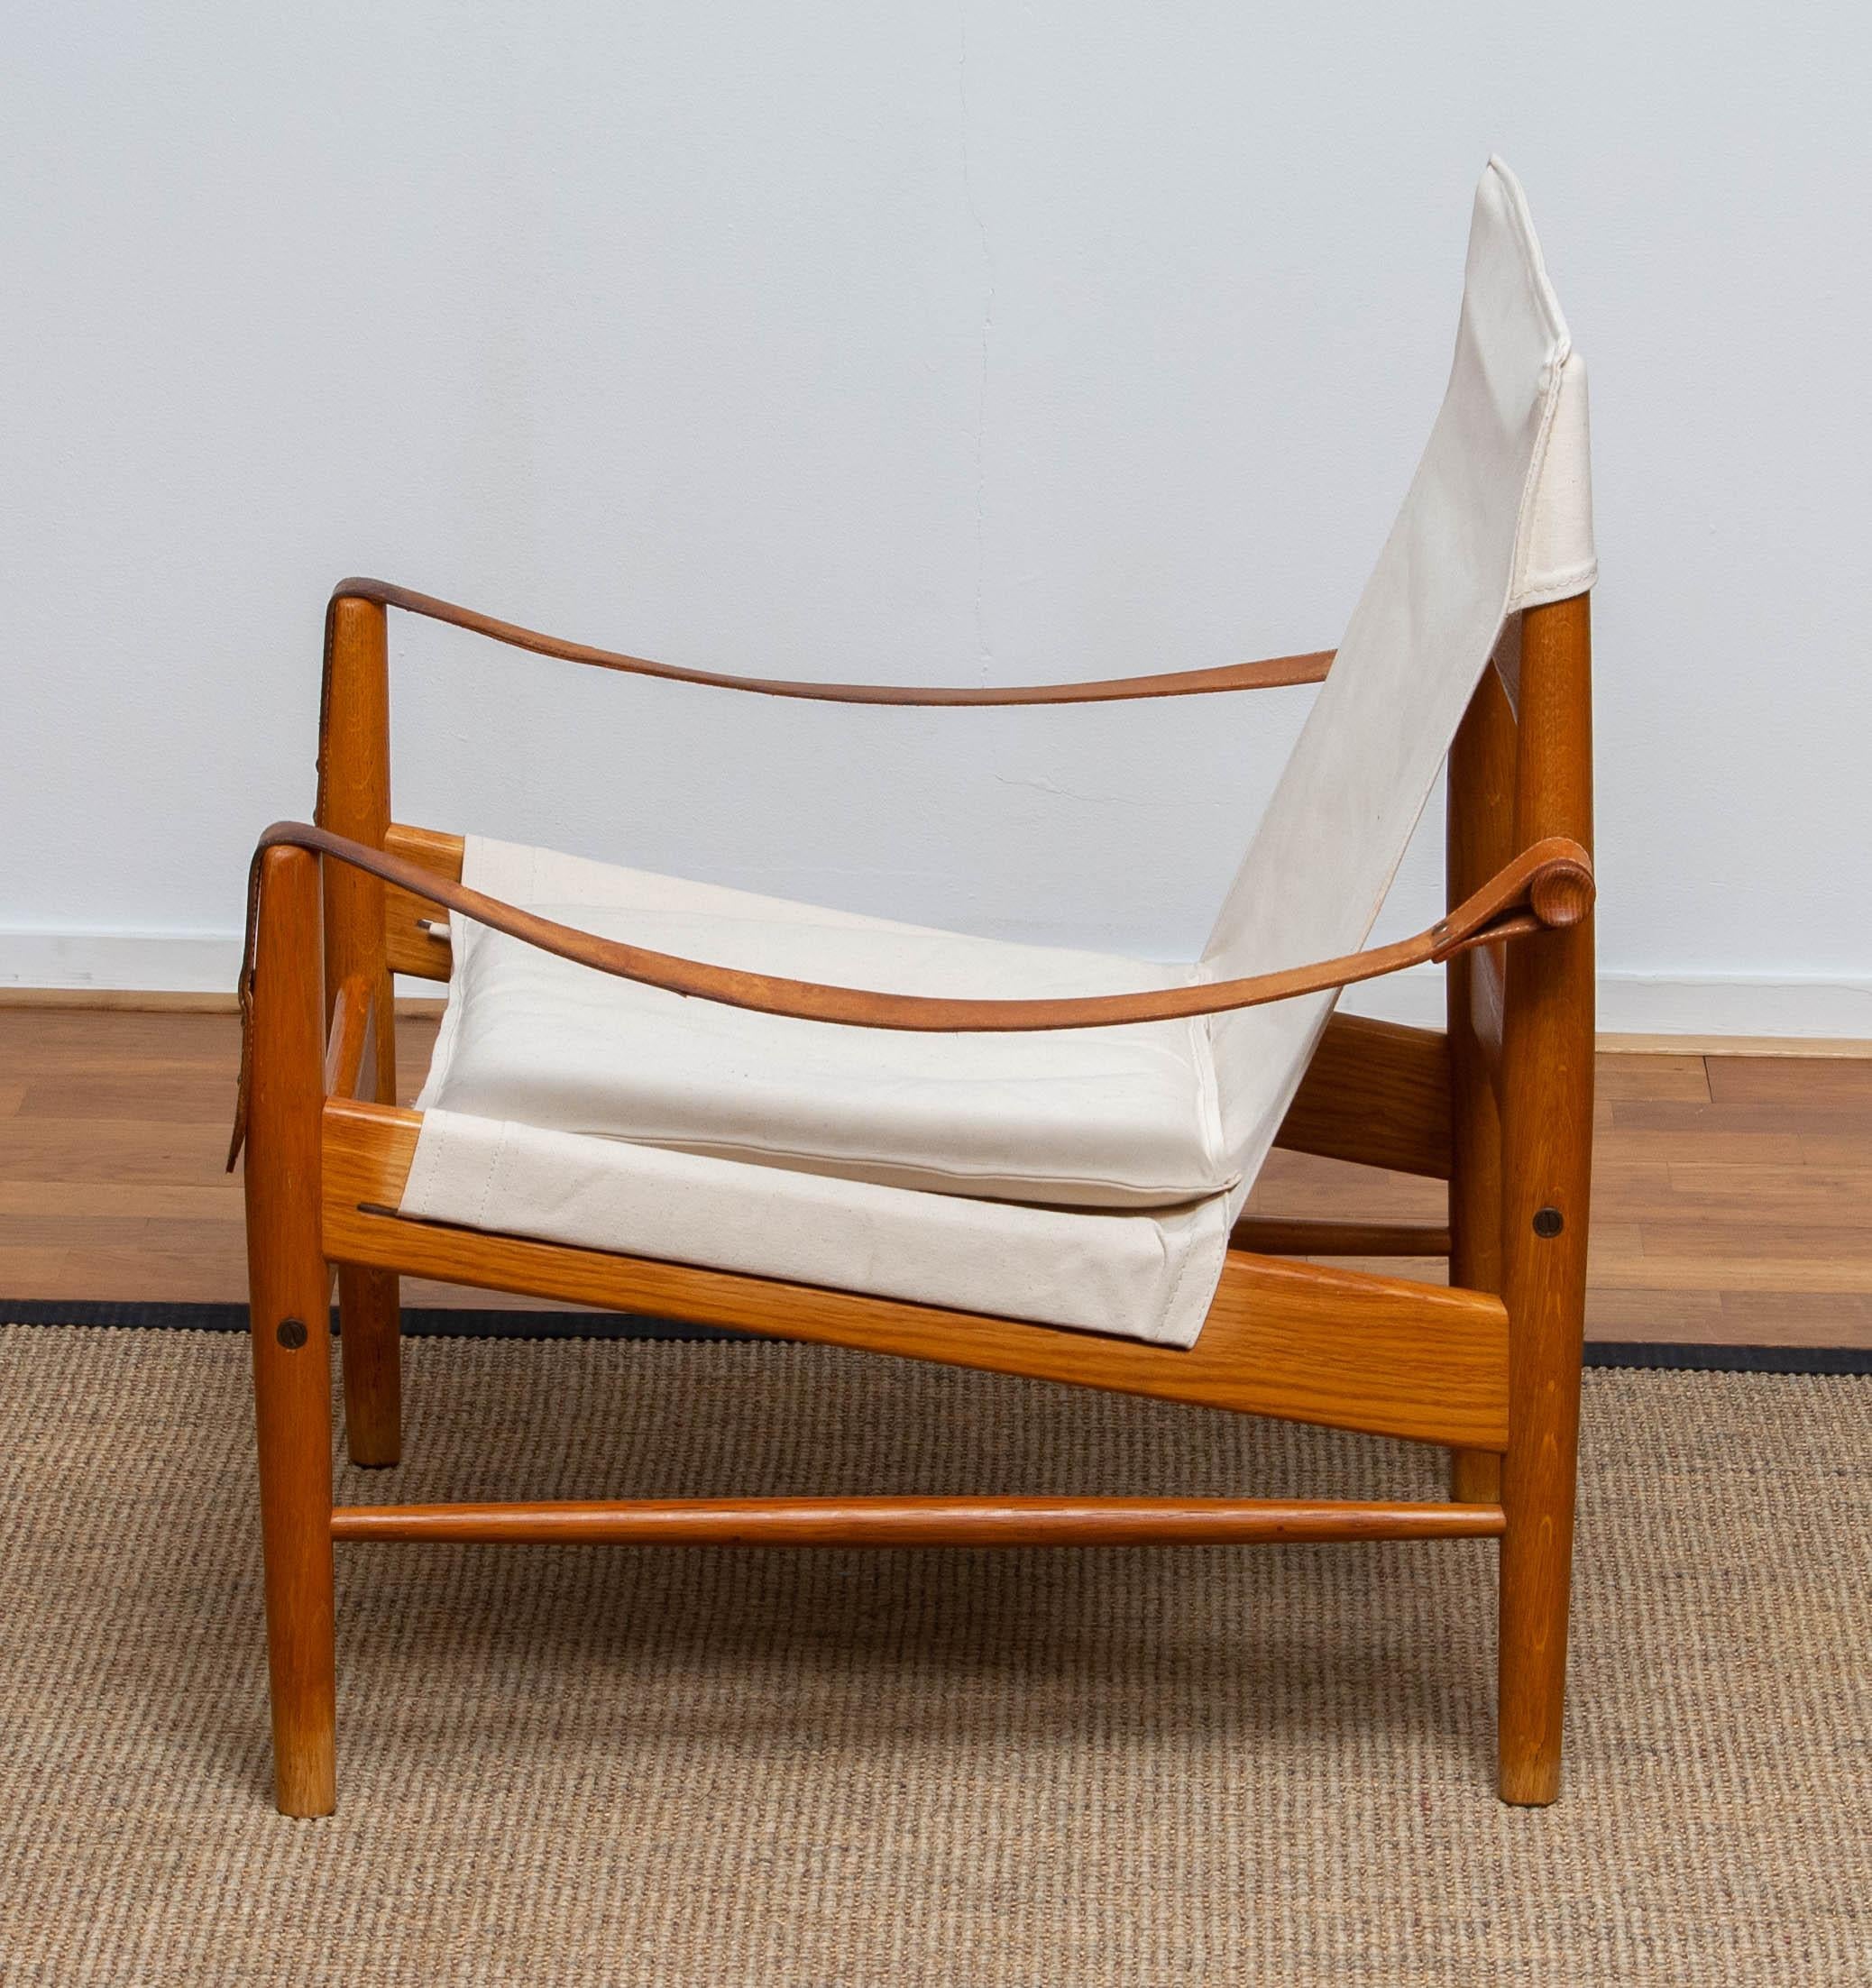 Mid-20th Century 1960s, Safari Lounge Chair by Hans Olsen for Viska Möbler in Kinna, Sweden 1960s